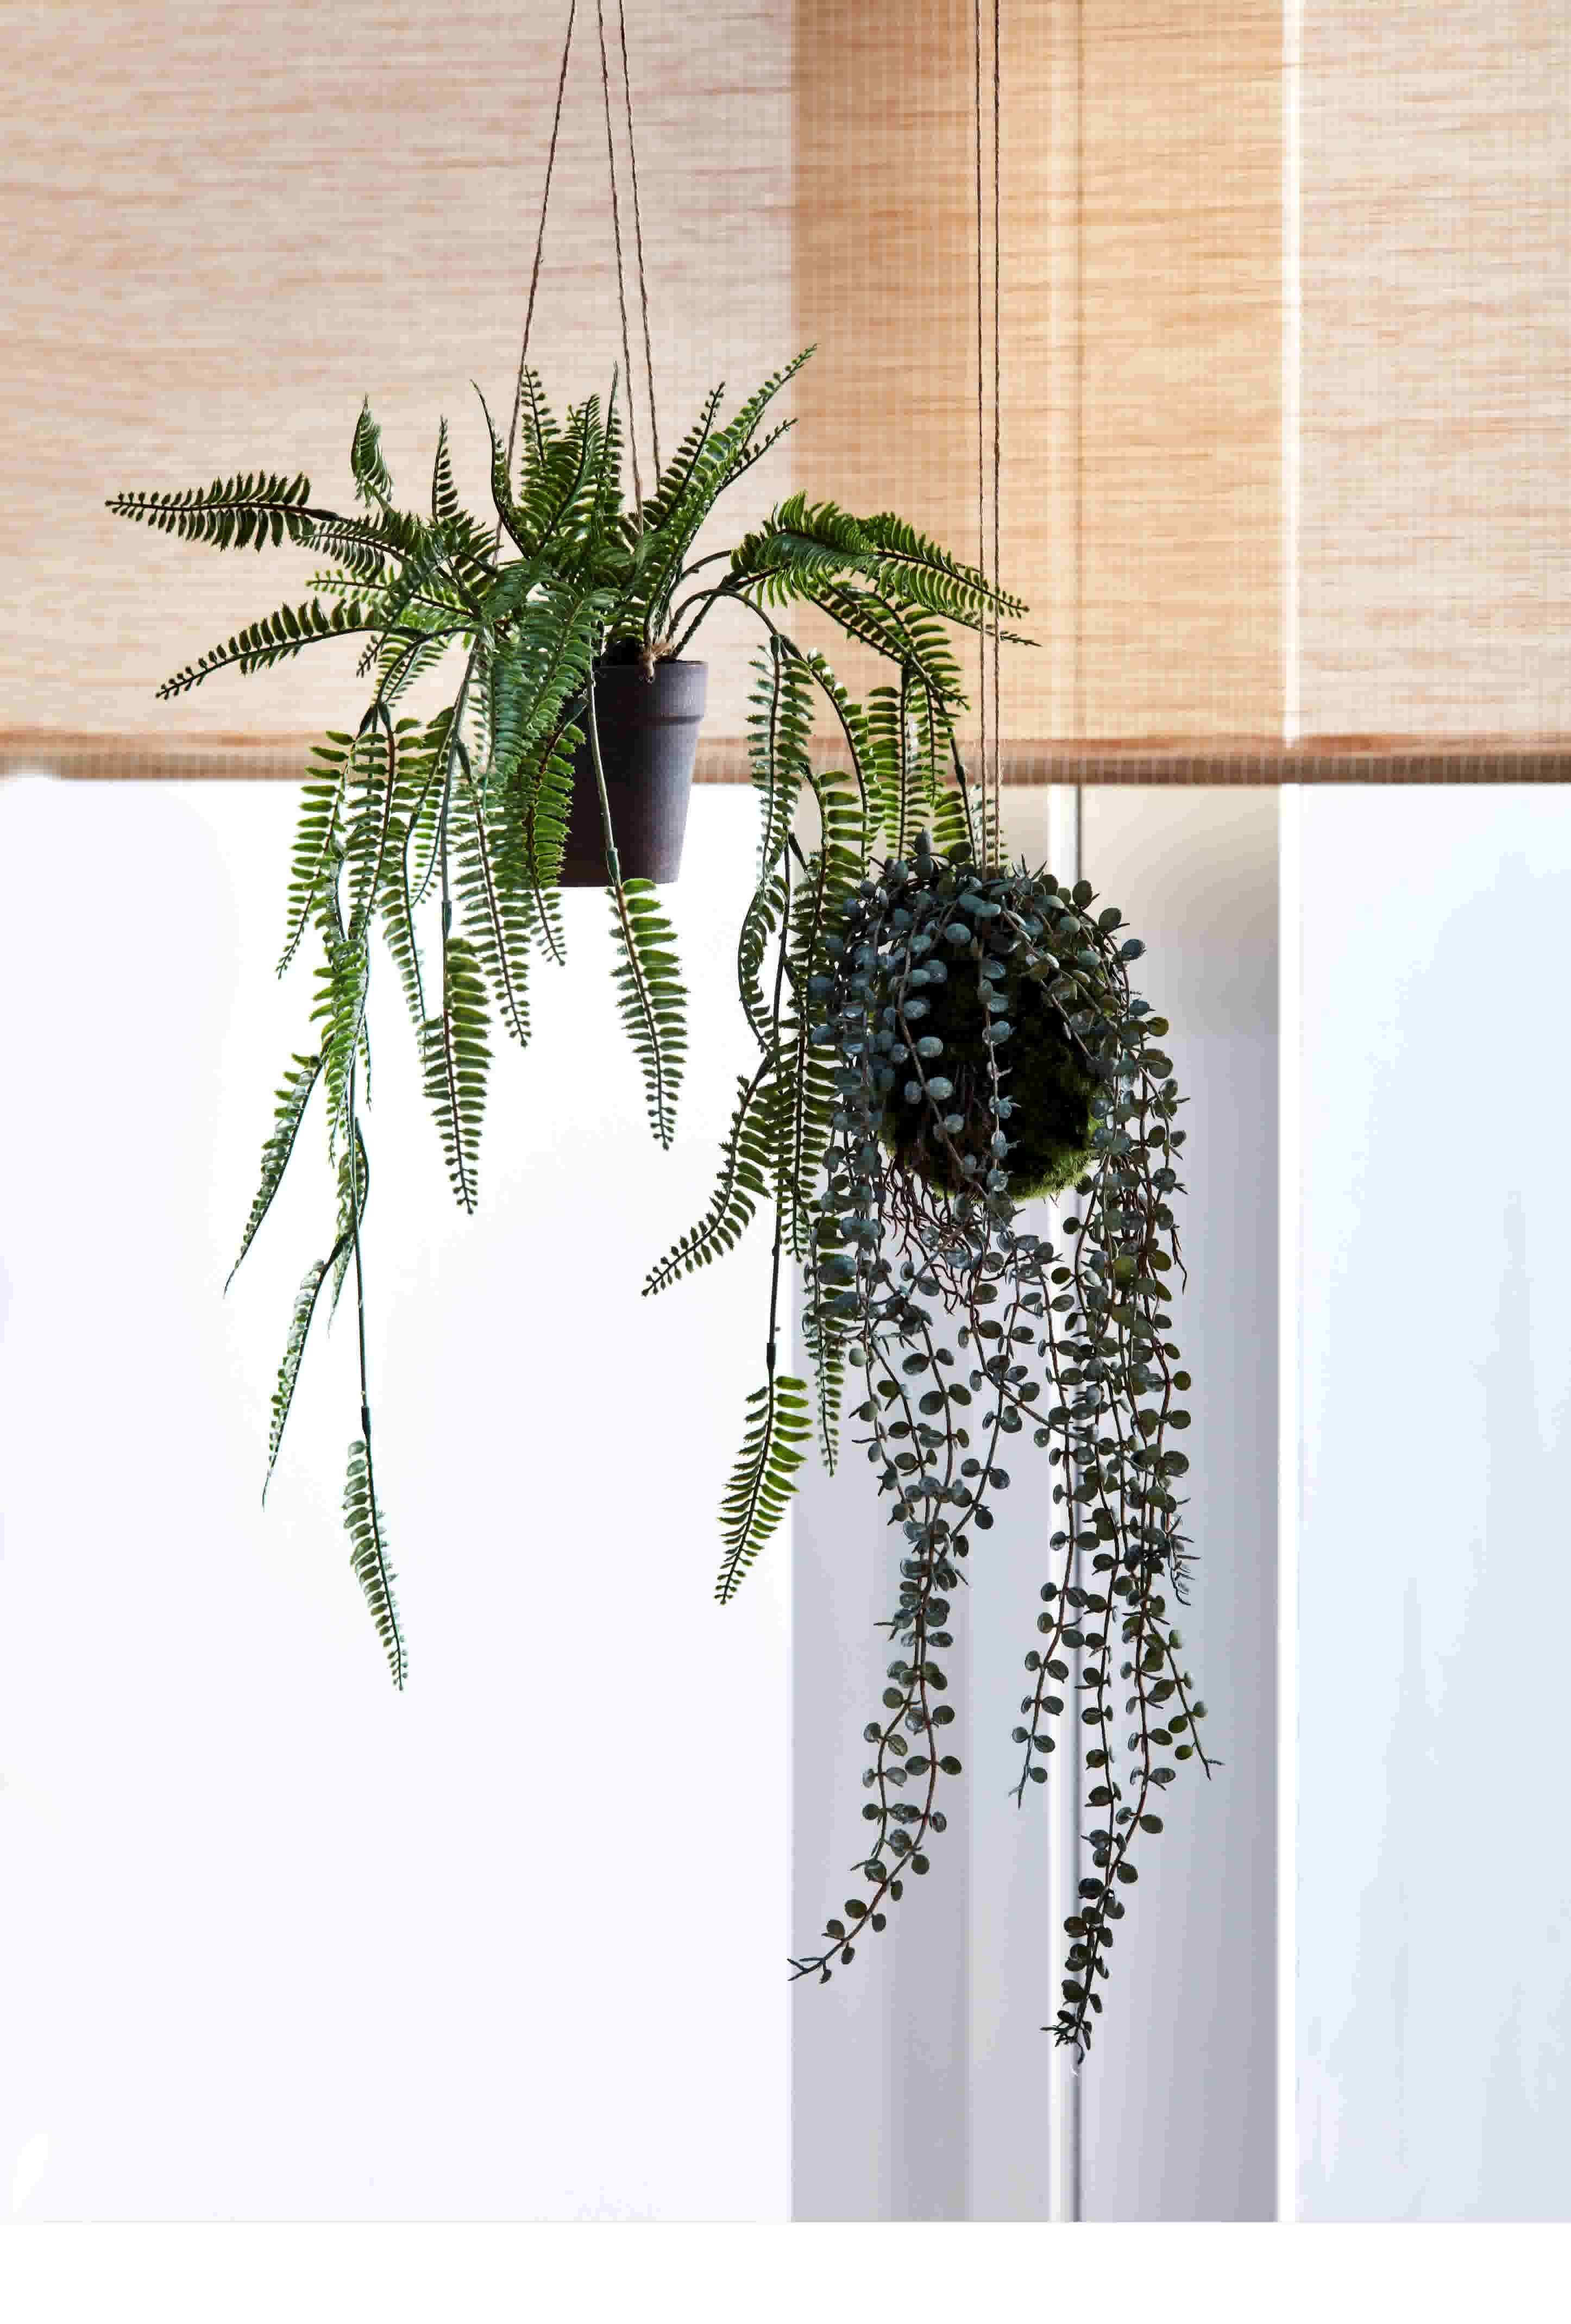 Groen in huis: Je woonkamer stylen met (grote) kamerplanten